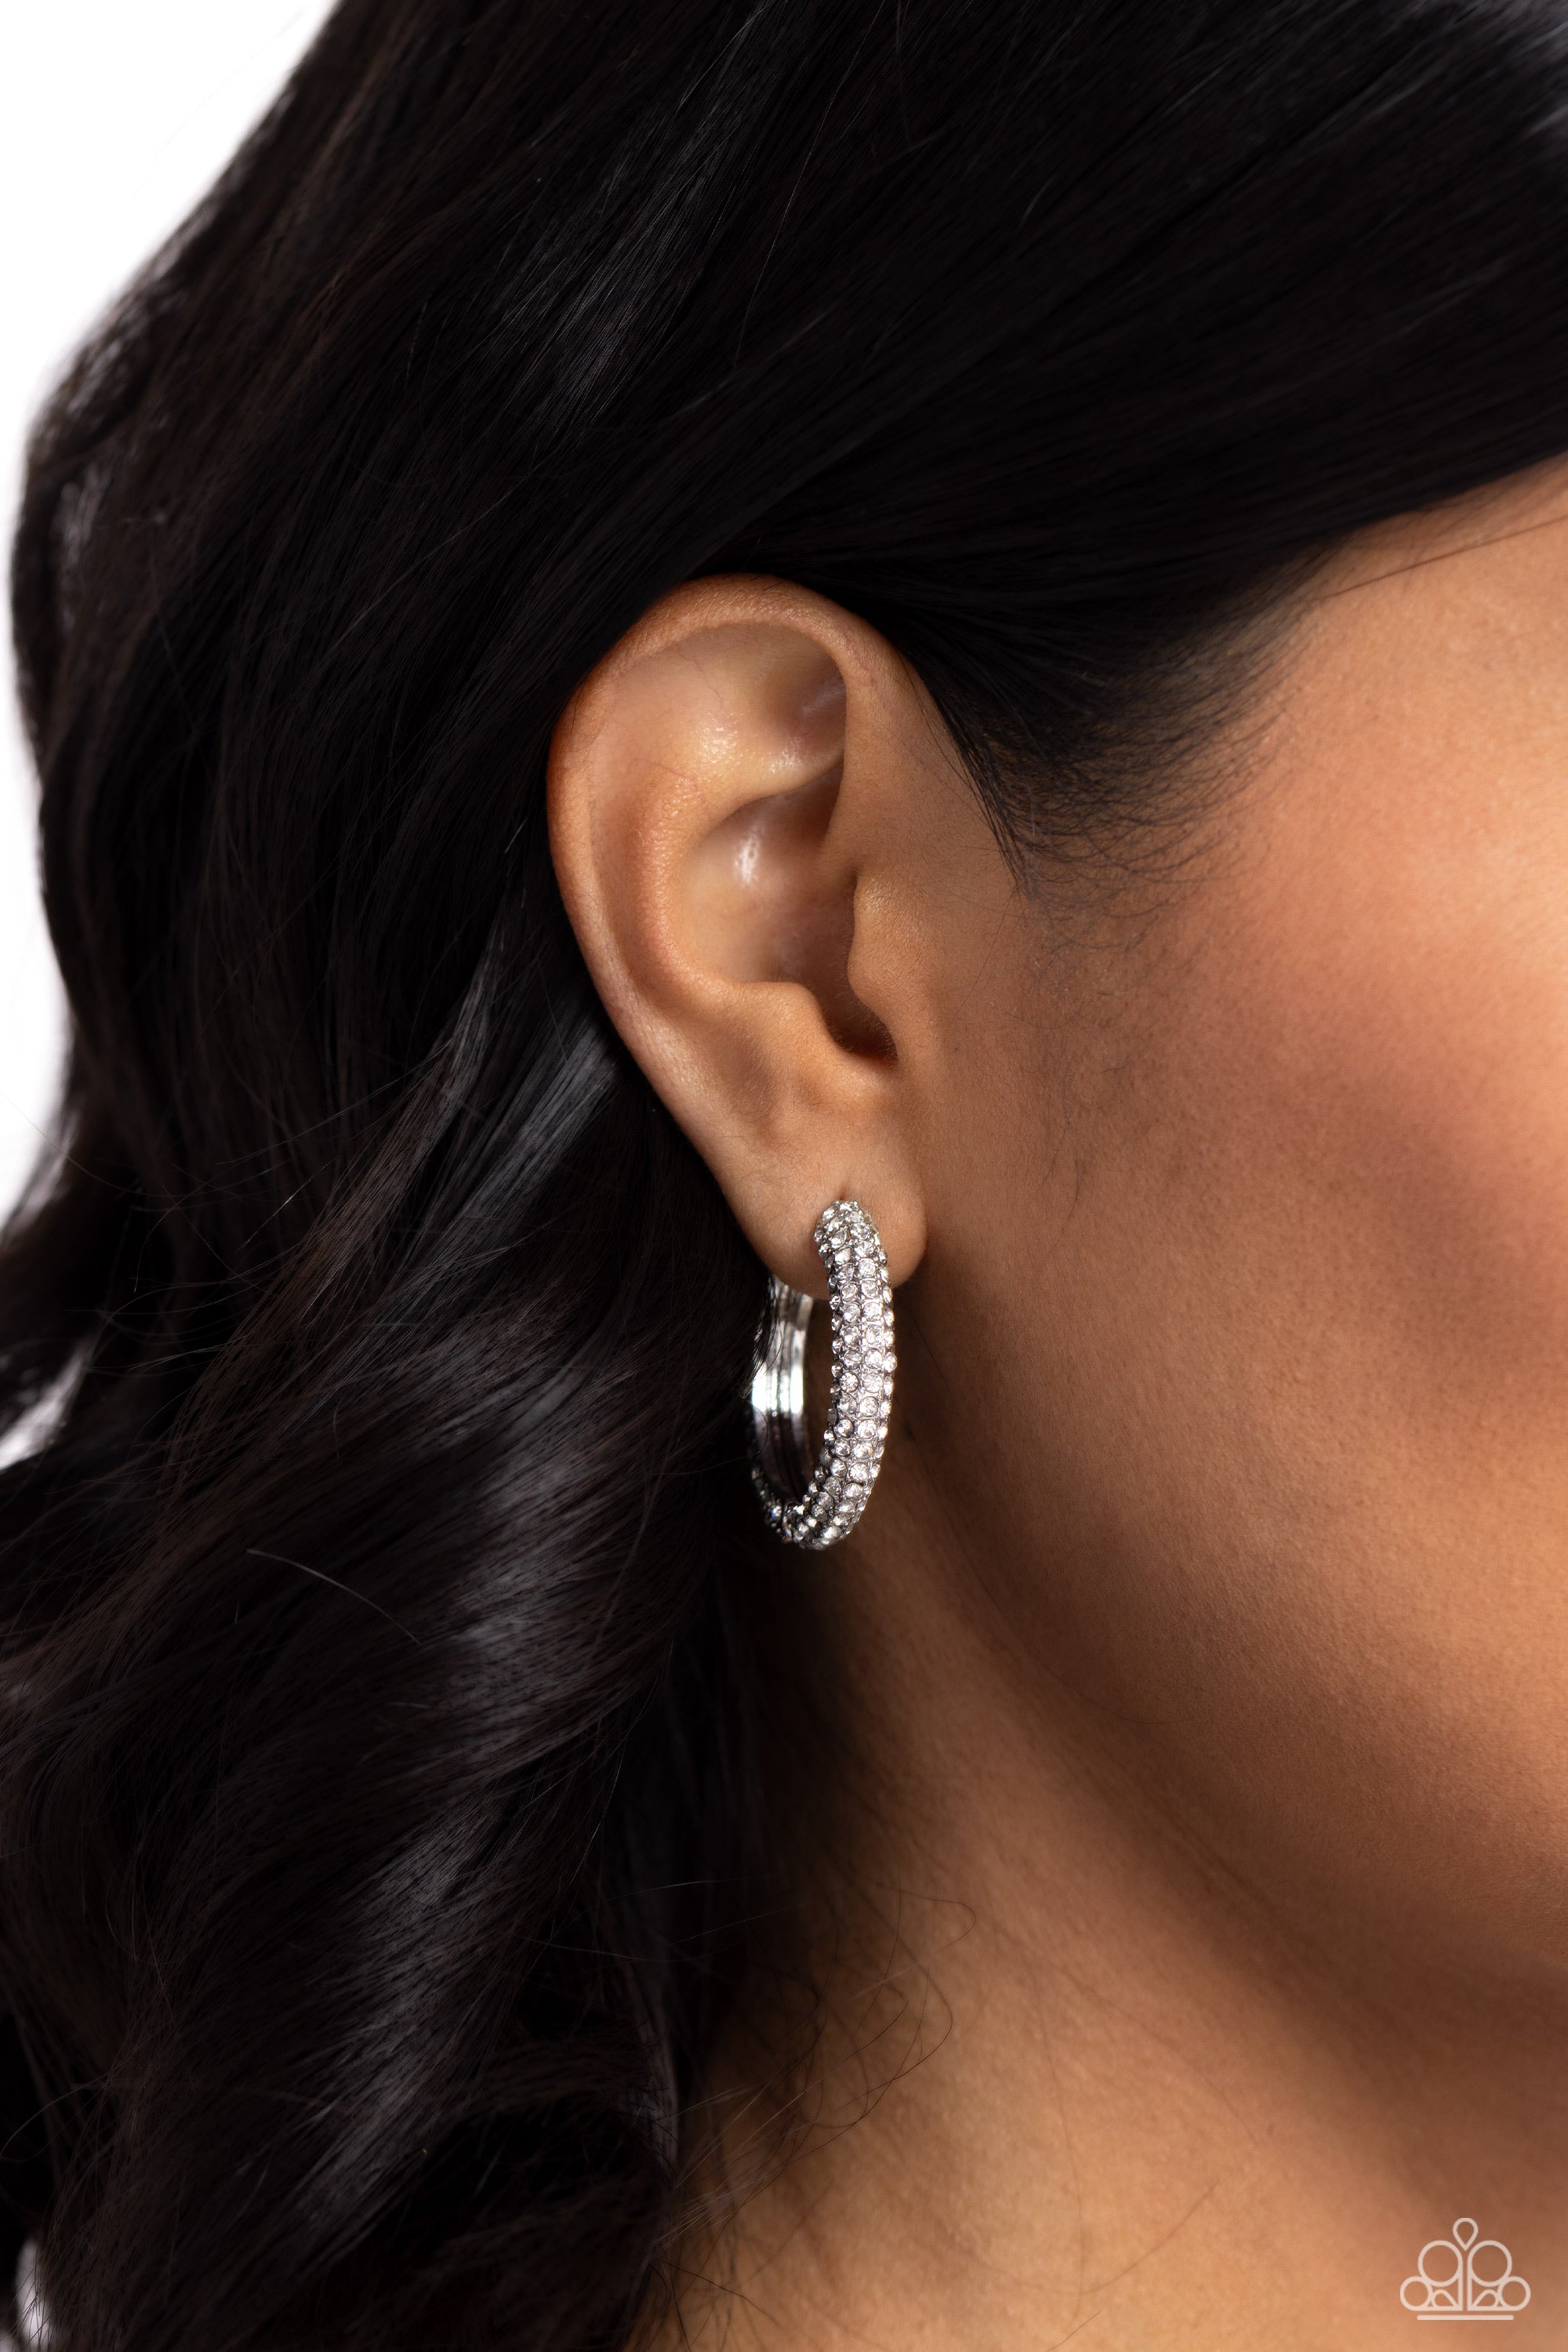 Glowing Praise White Rhinestone Hoop Earrings - Paparazzi Accessories- lightbox - CarasShop.com - $5 Jewelry by Cara Jewels